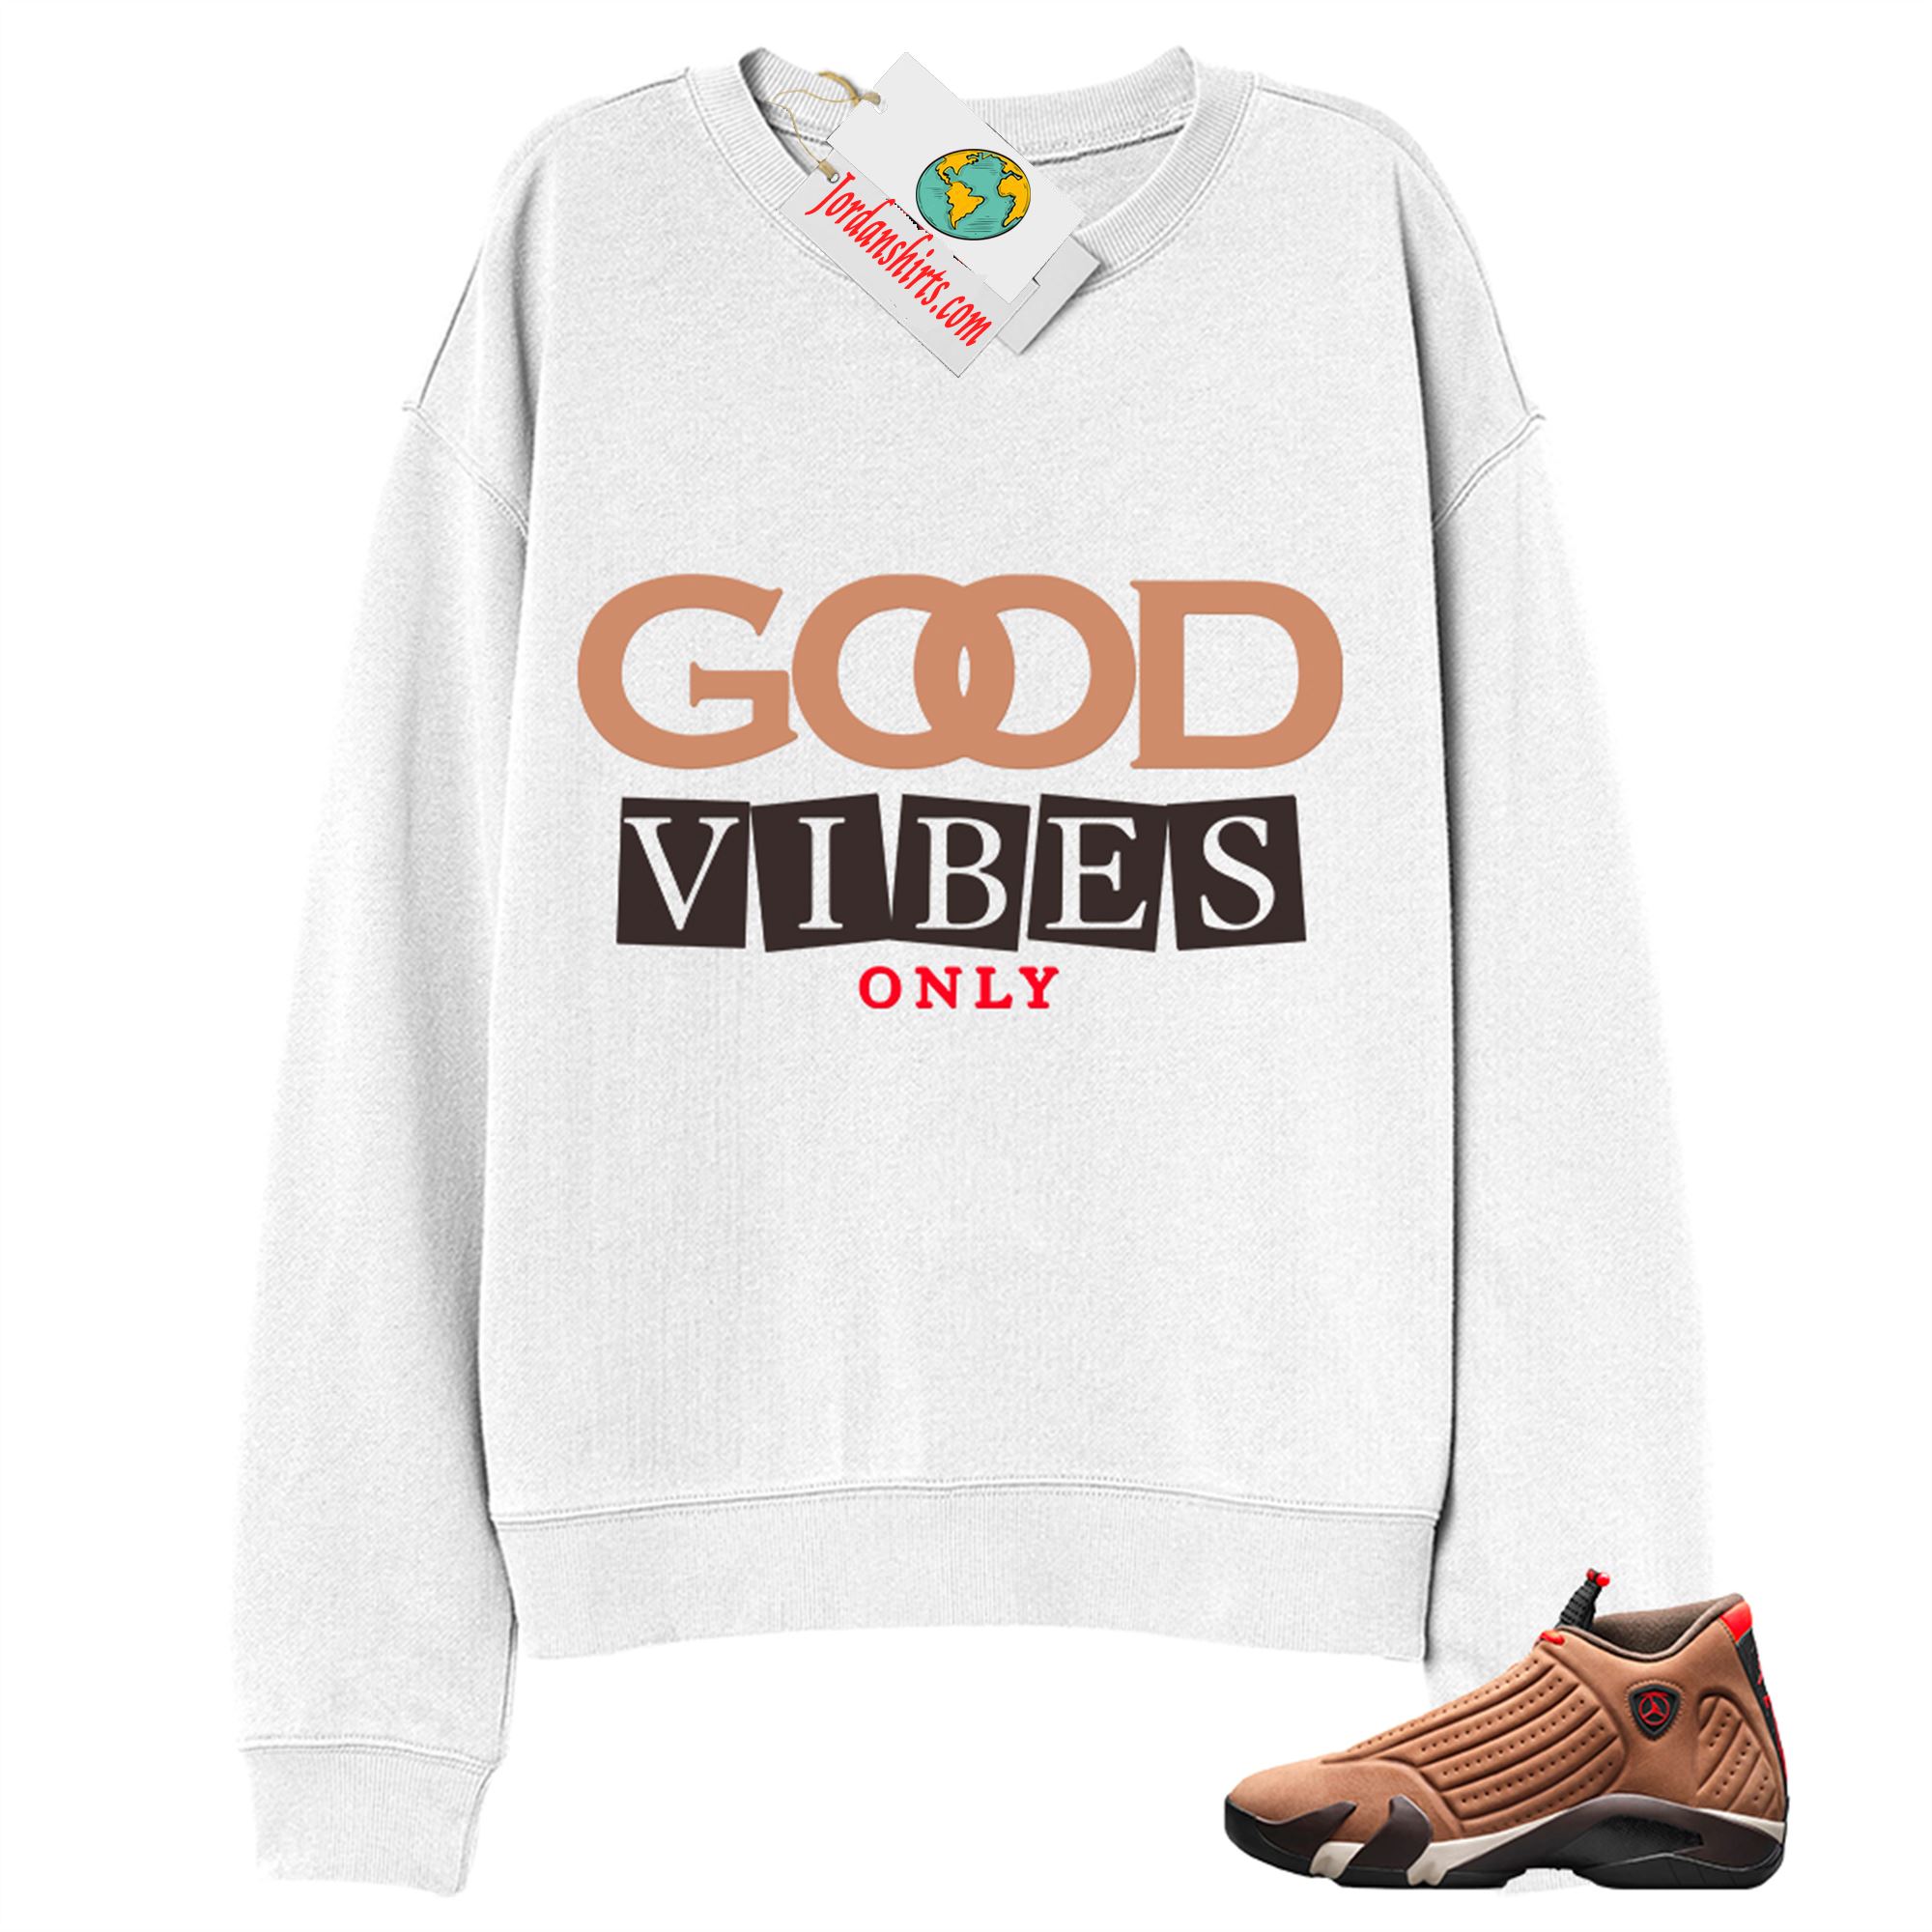 Jordan 14 Sweatshirt, Good Vibes Only White Sweatshirt Air Jordan 14 Winterized 14s Full Size Up To 5xl